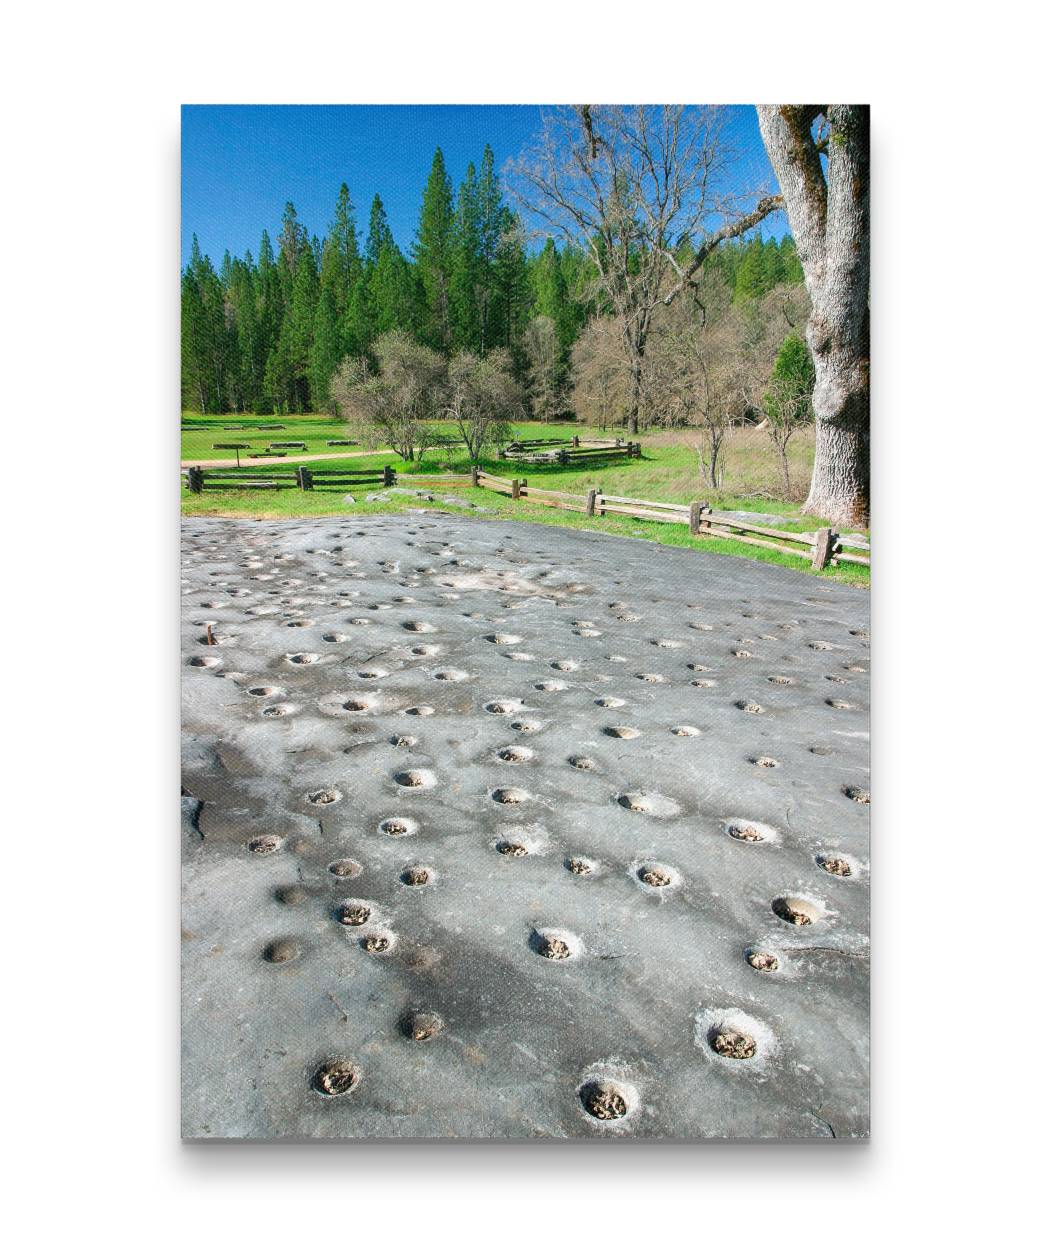 Bedrock Mortars, Indian Grinding Rock State Historic Park, California